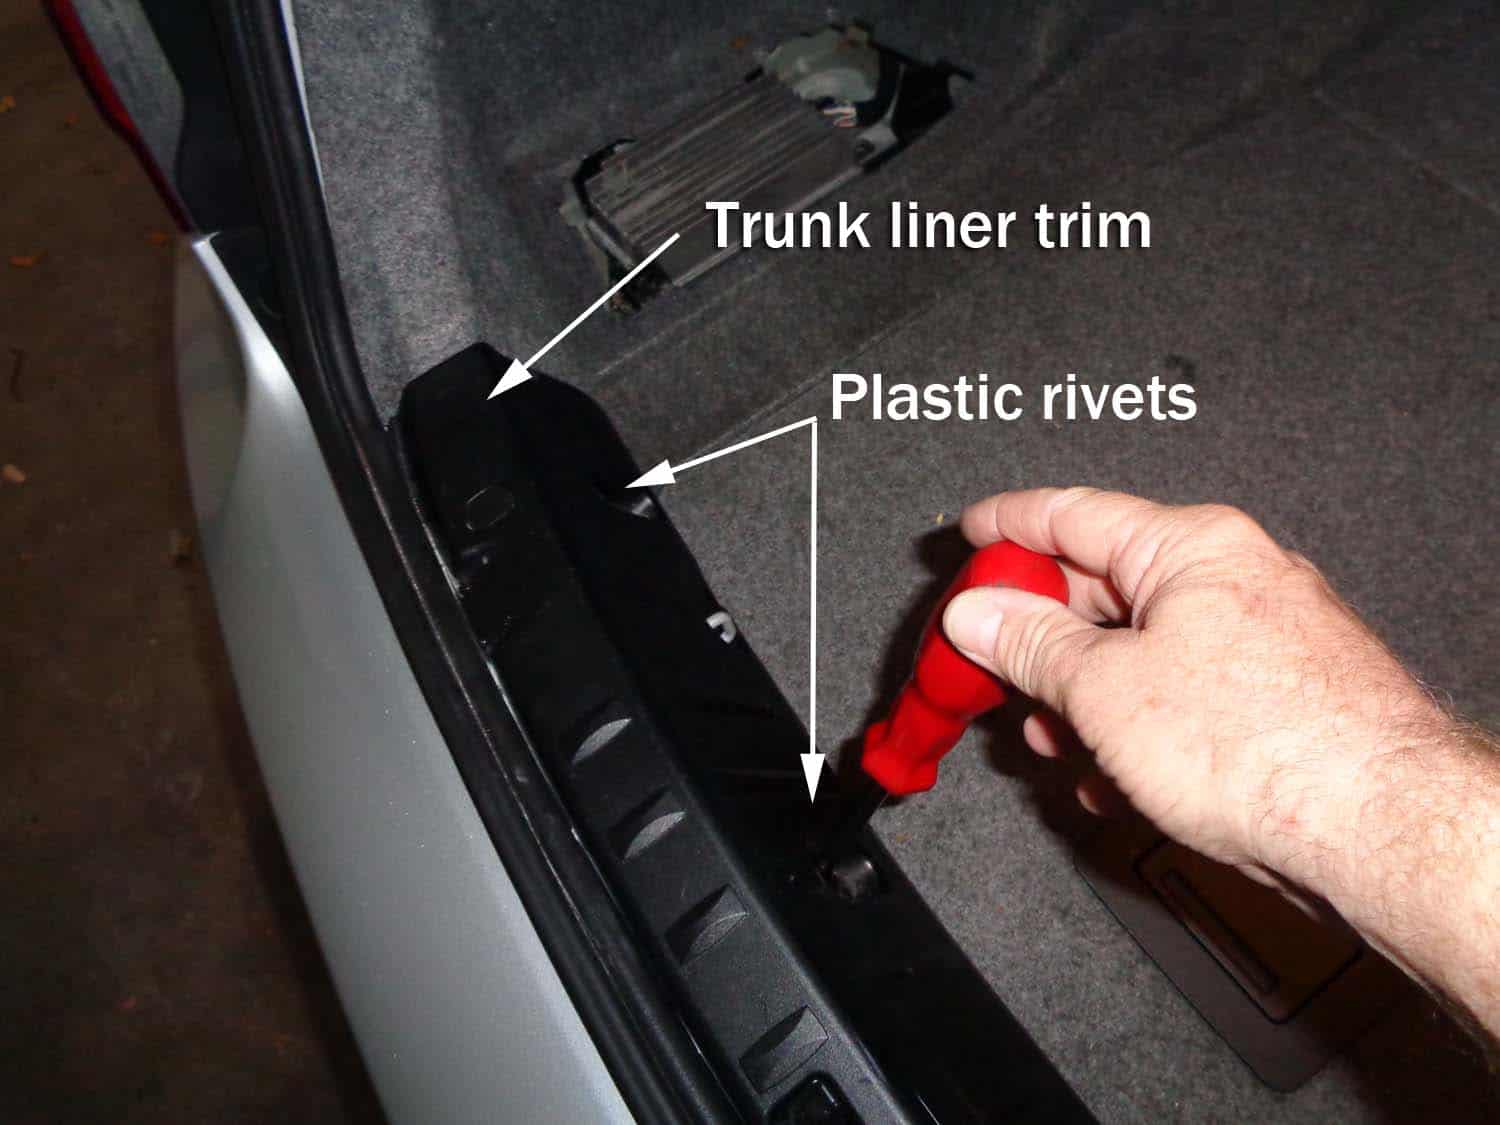 bmw e90 amplifier water damage repair - remove trunk liner trim